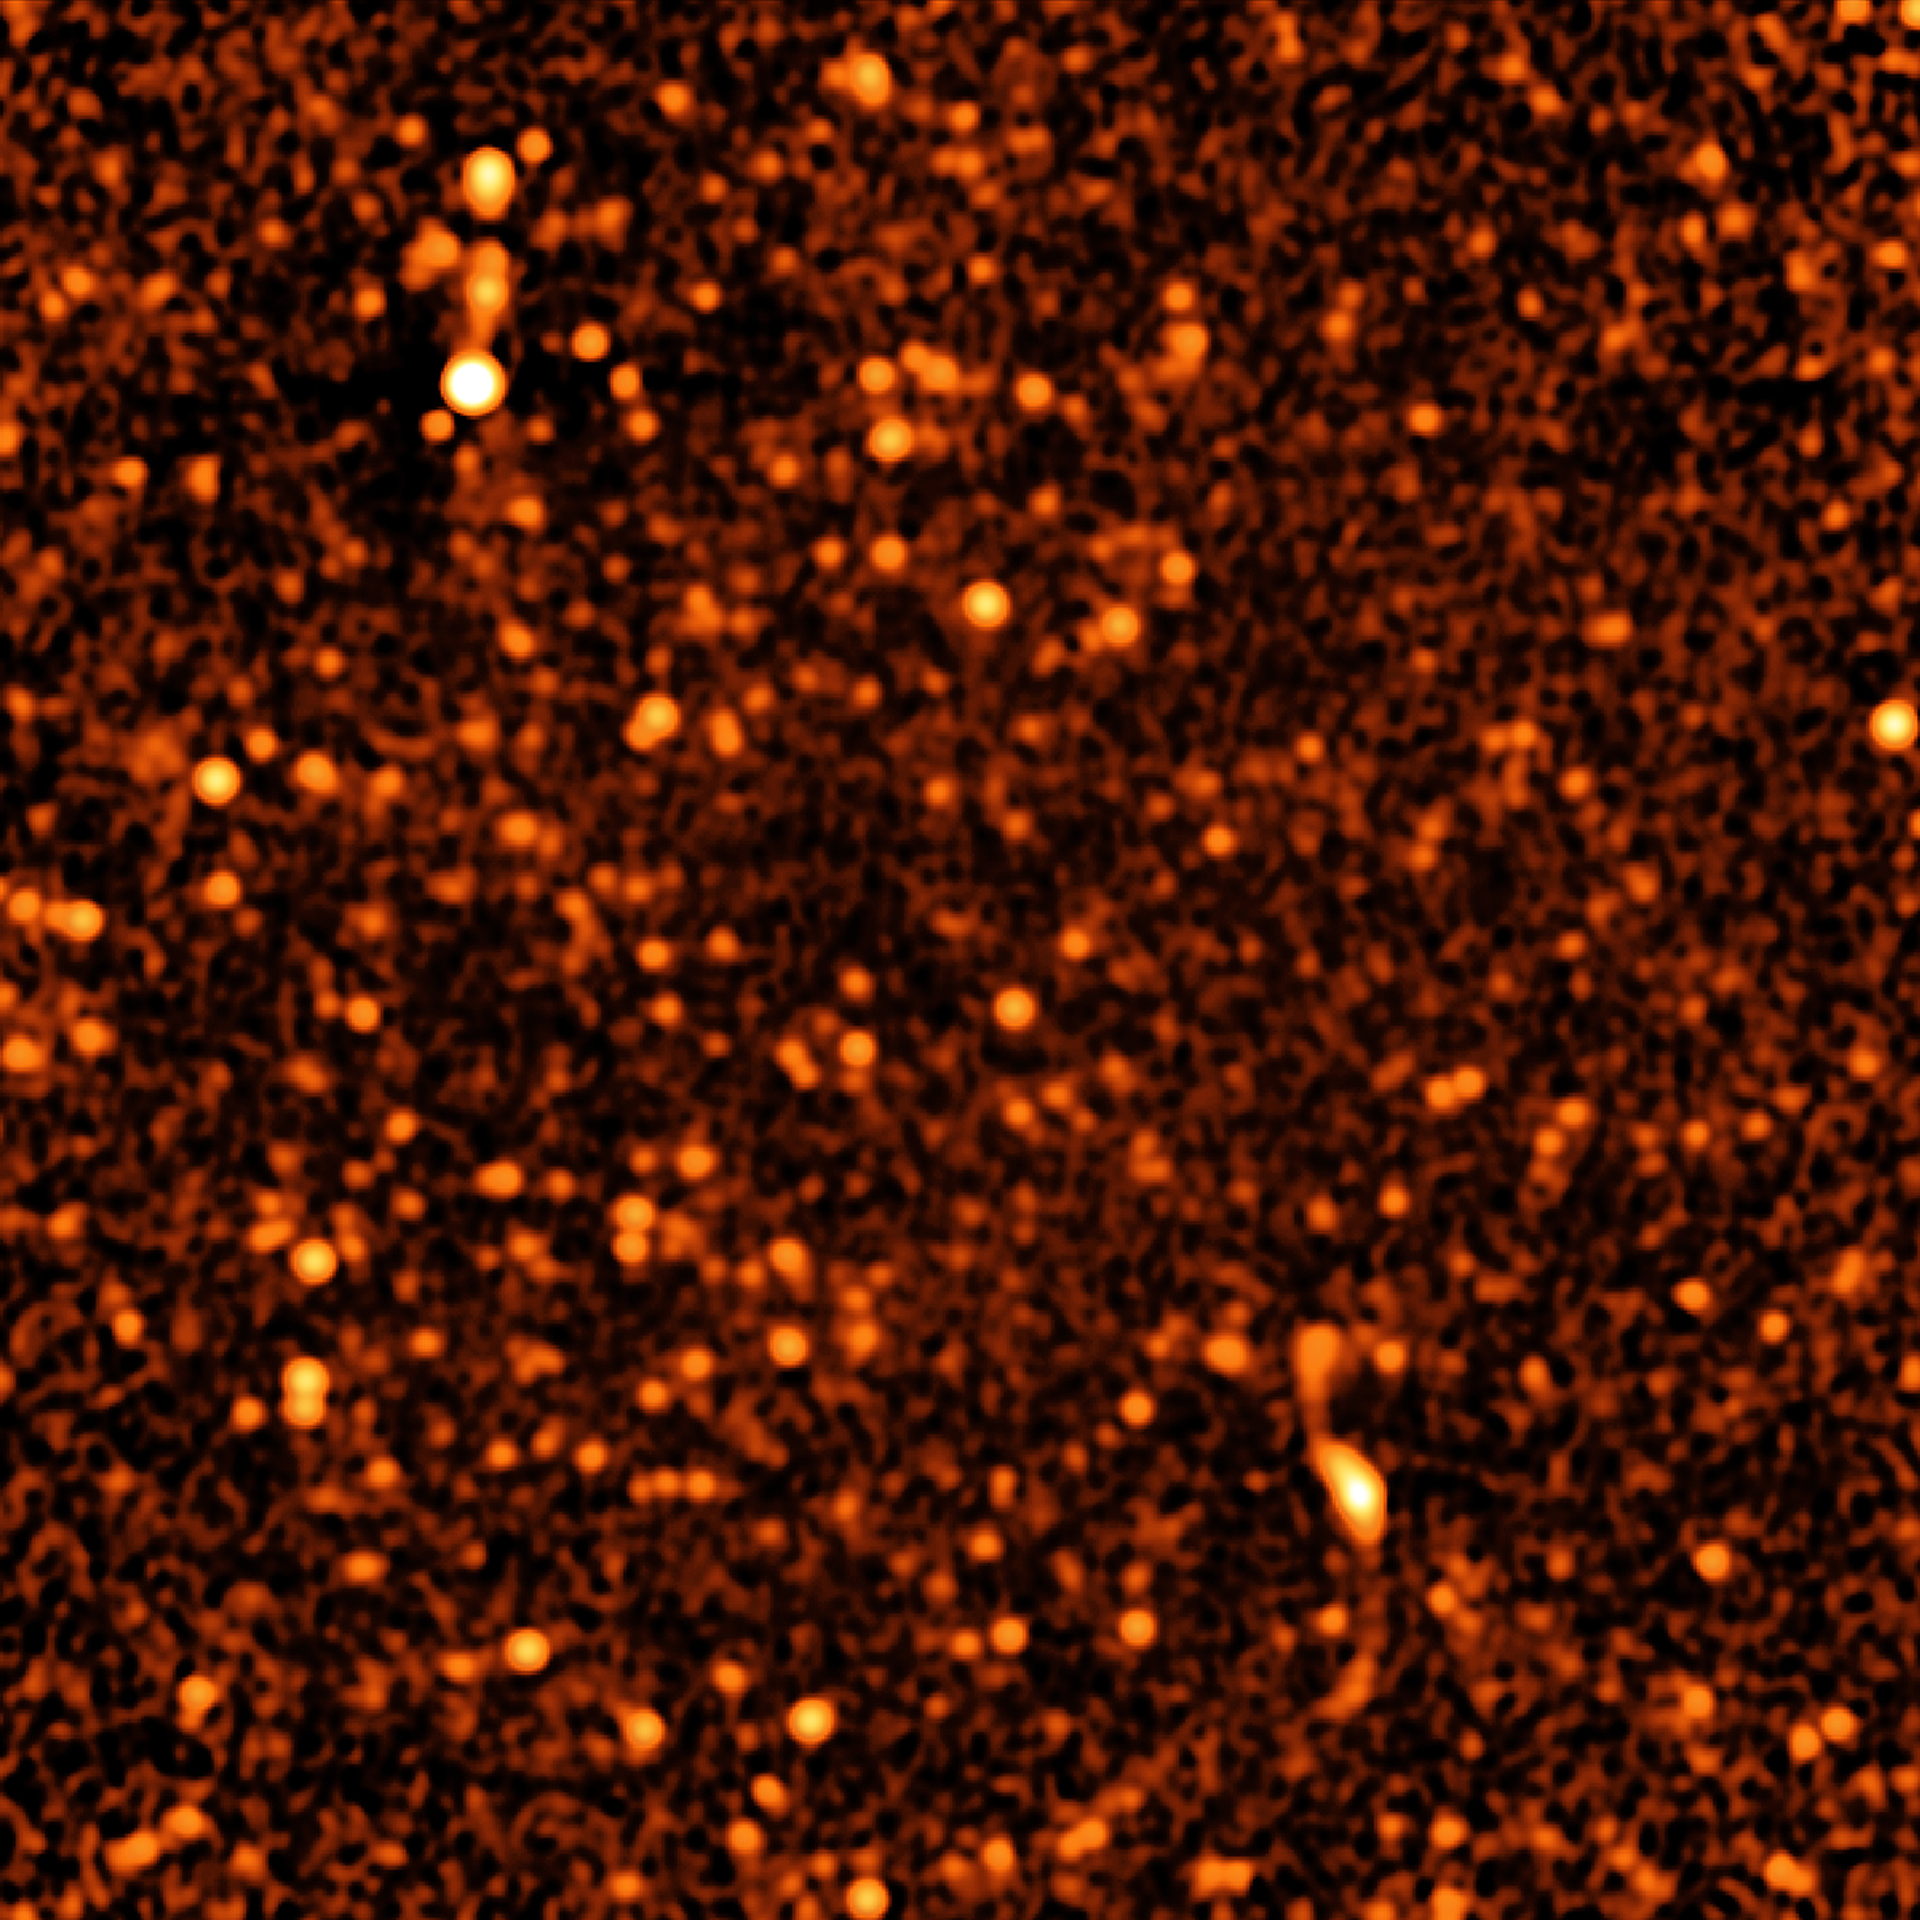 VLA Deep Field